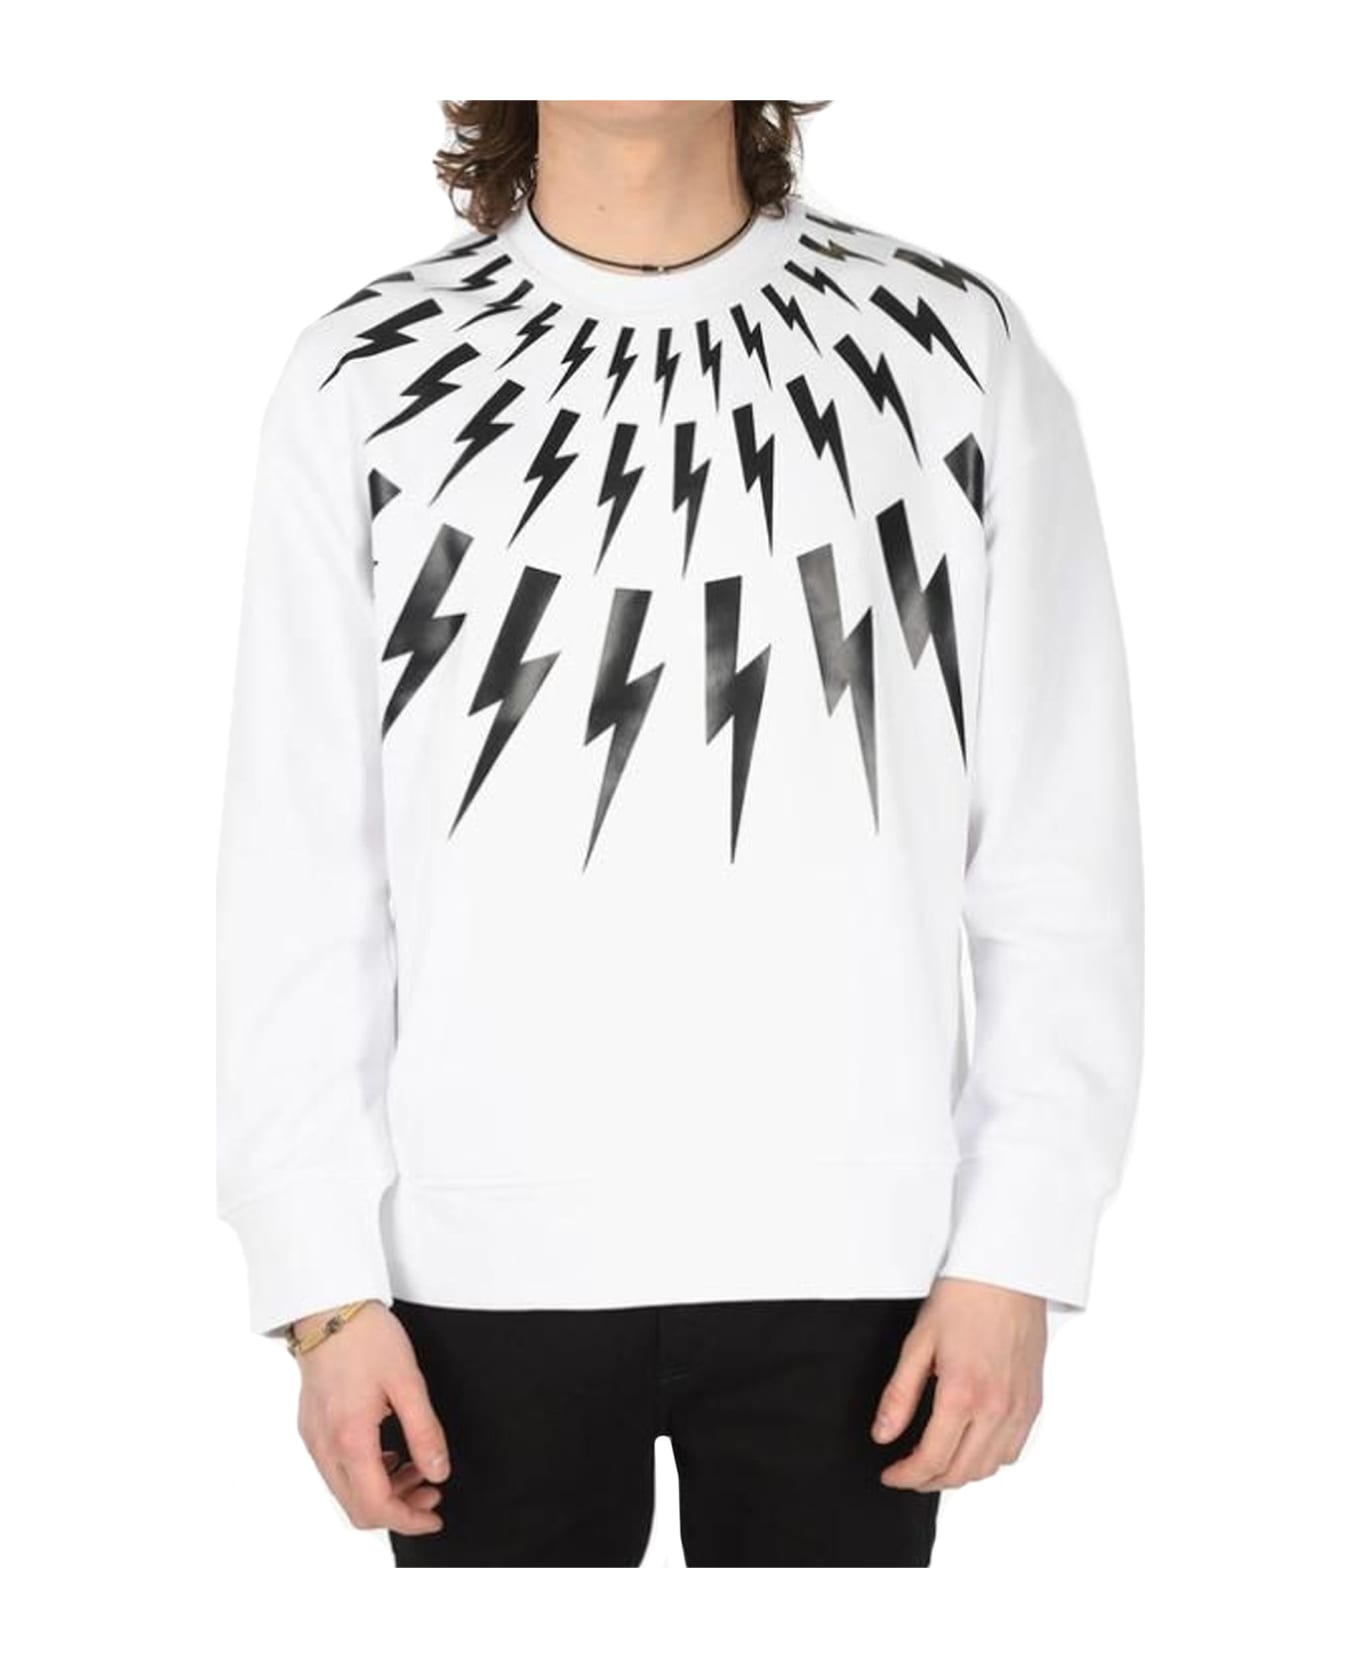 Neil Barrett Lightning Print Sweatshirt - White